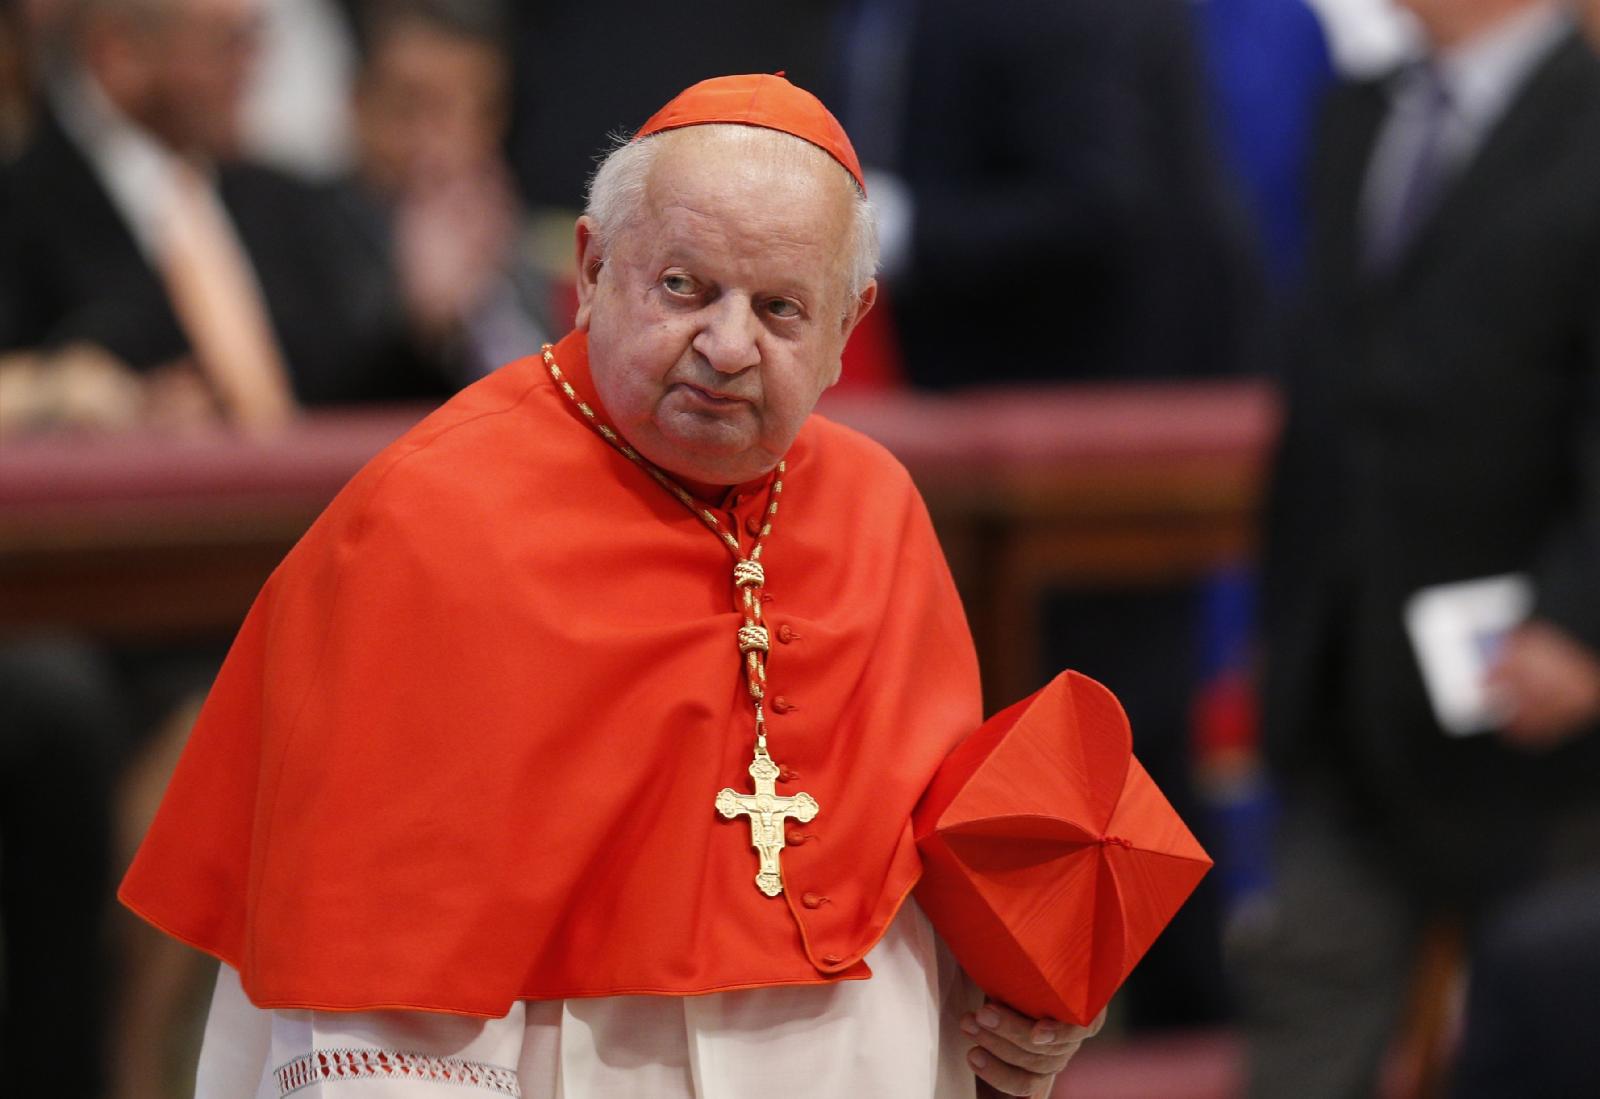 Former papal secretary asserts innocence